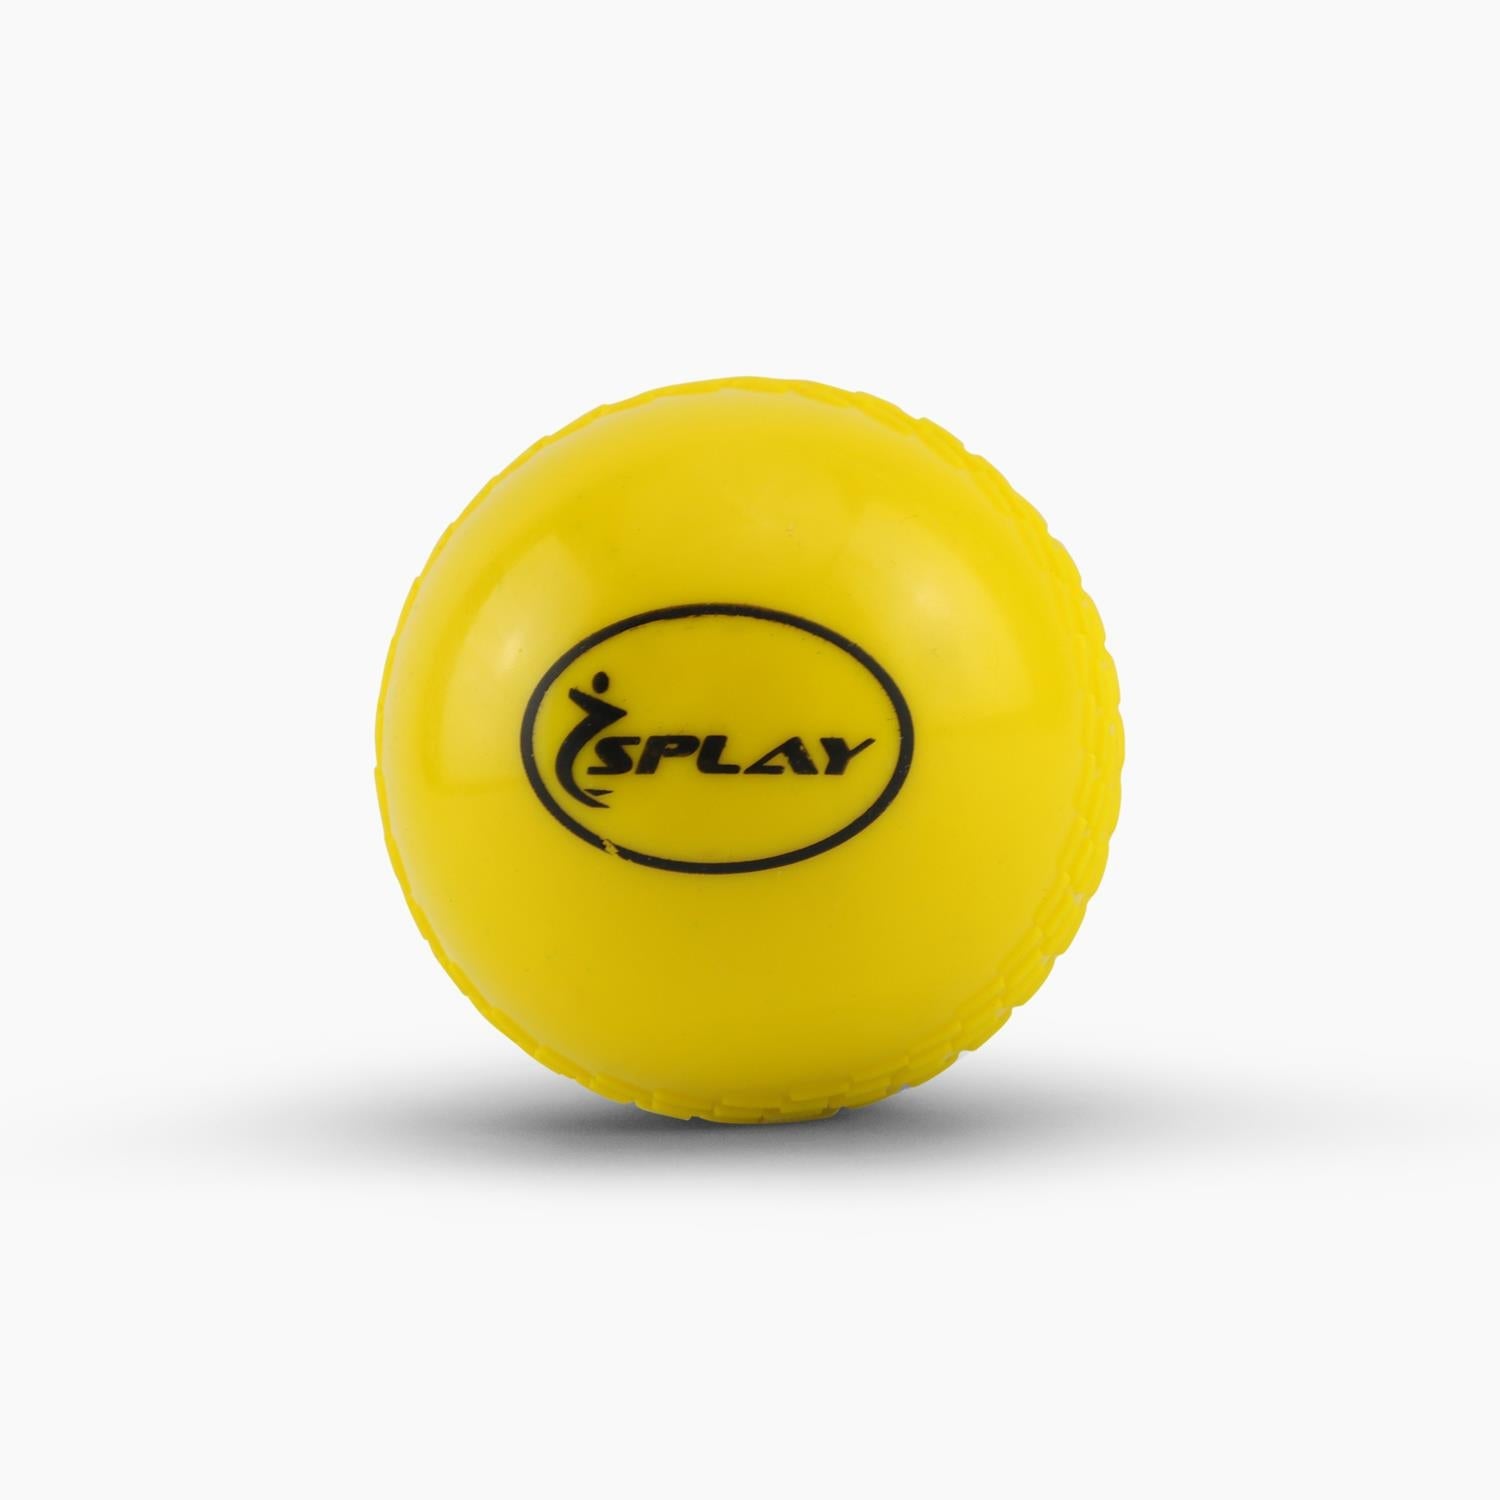 Buy PU Cricket Windball-Cricket Ball-Splay (UK) Limited-Splay UK Online